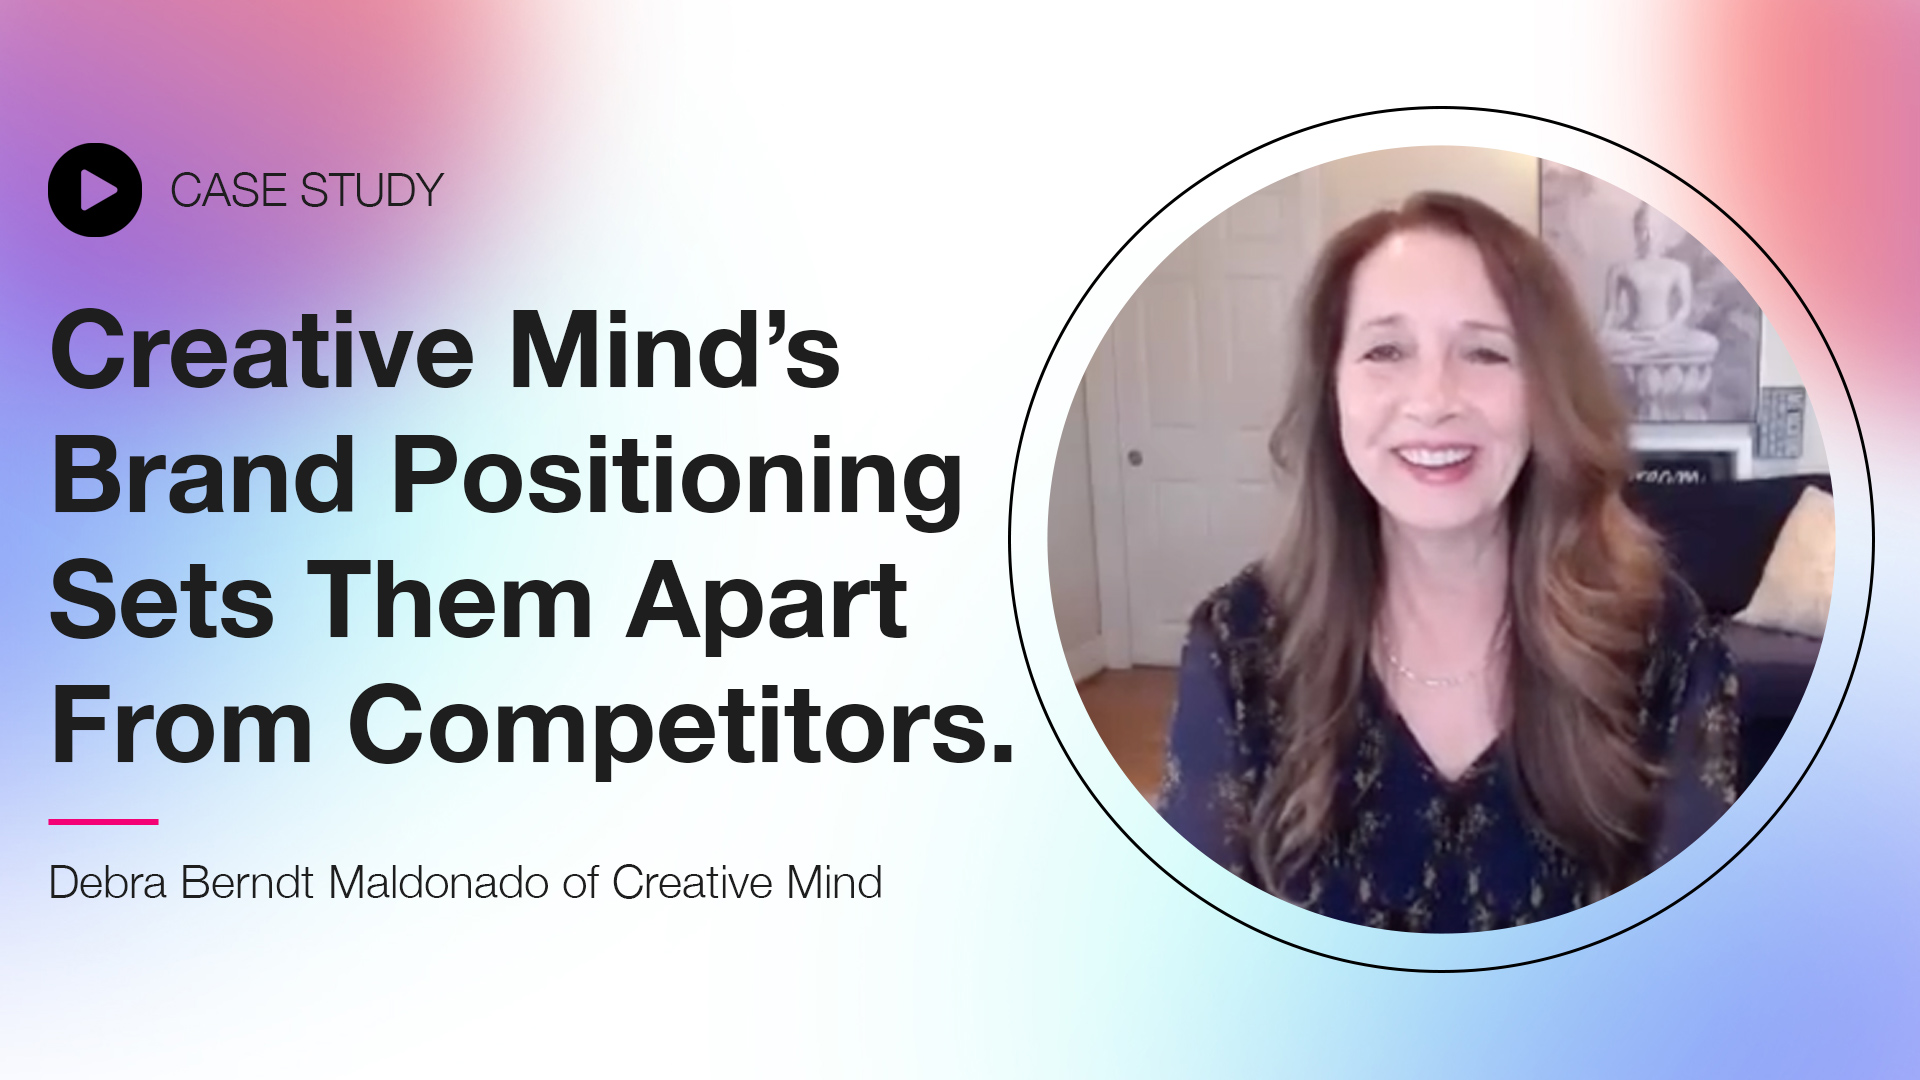 Debra Maldonado from Creative Mind talks about Brand Positioning